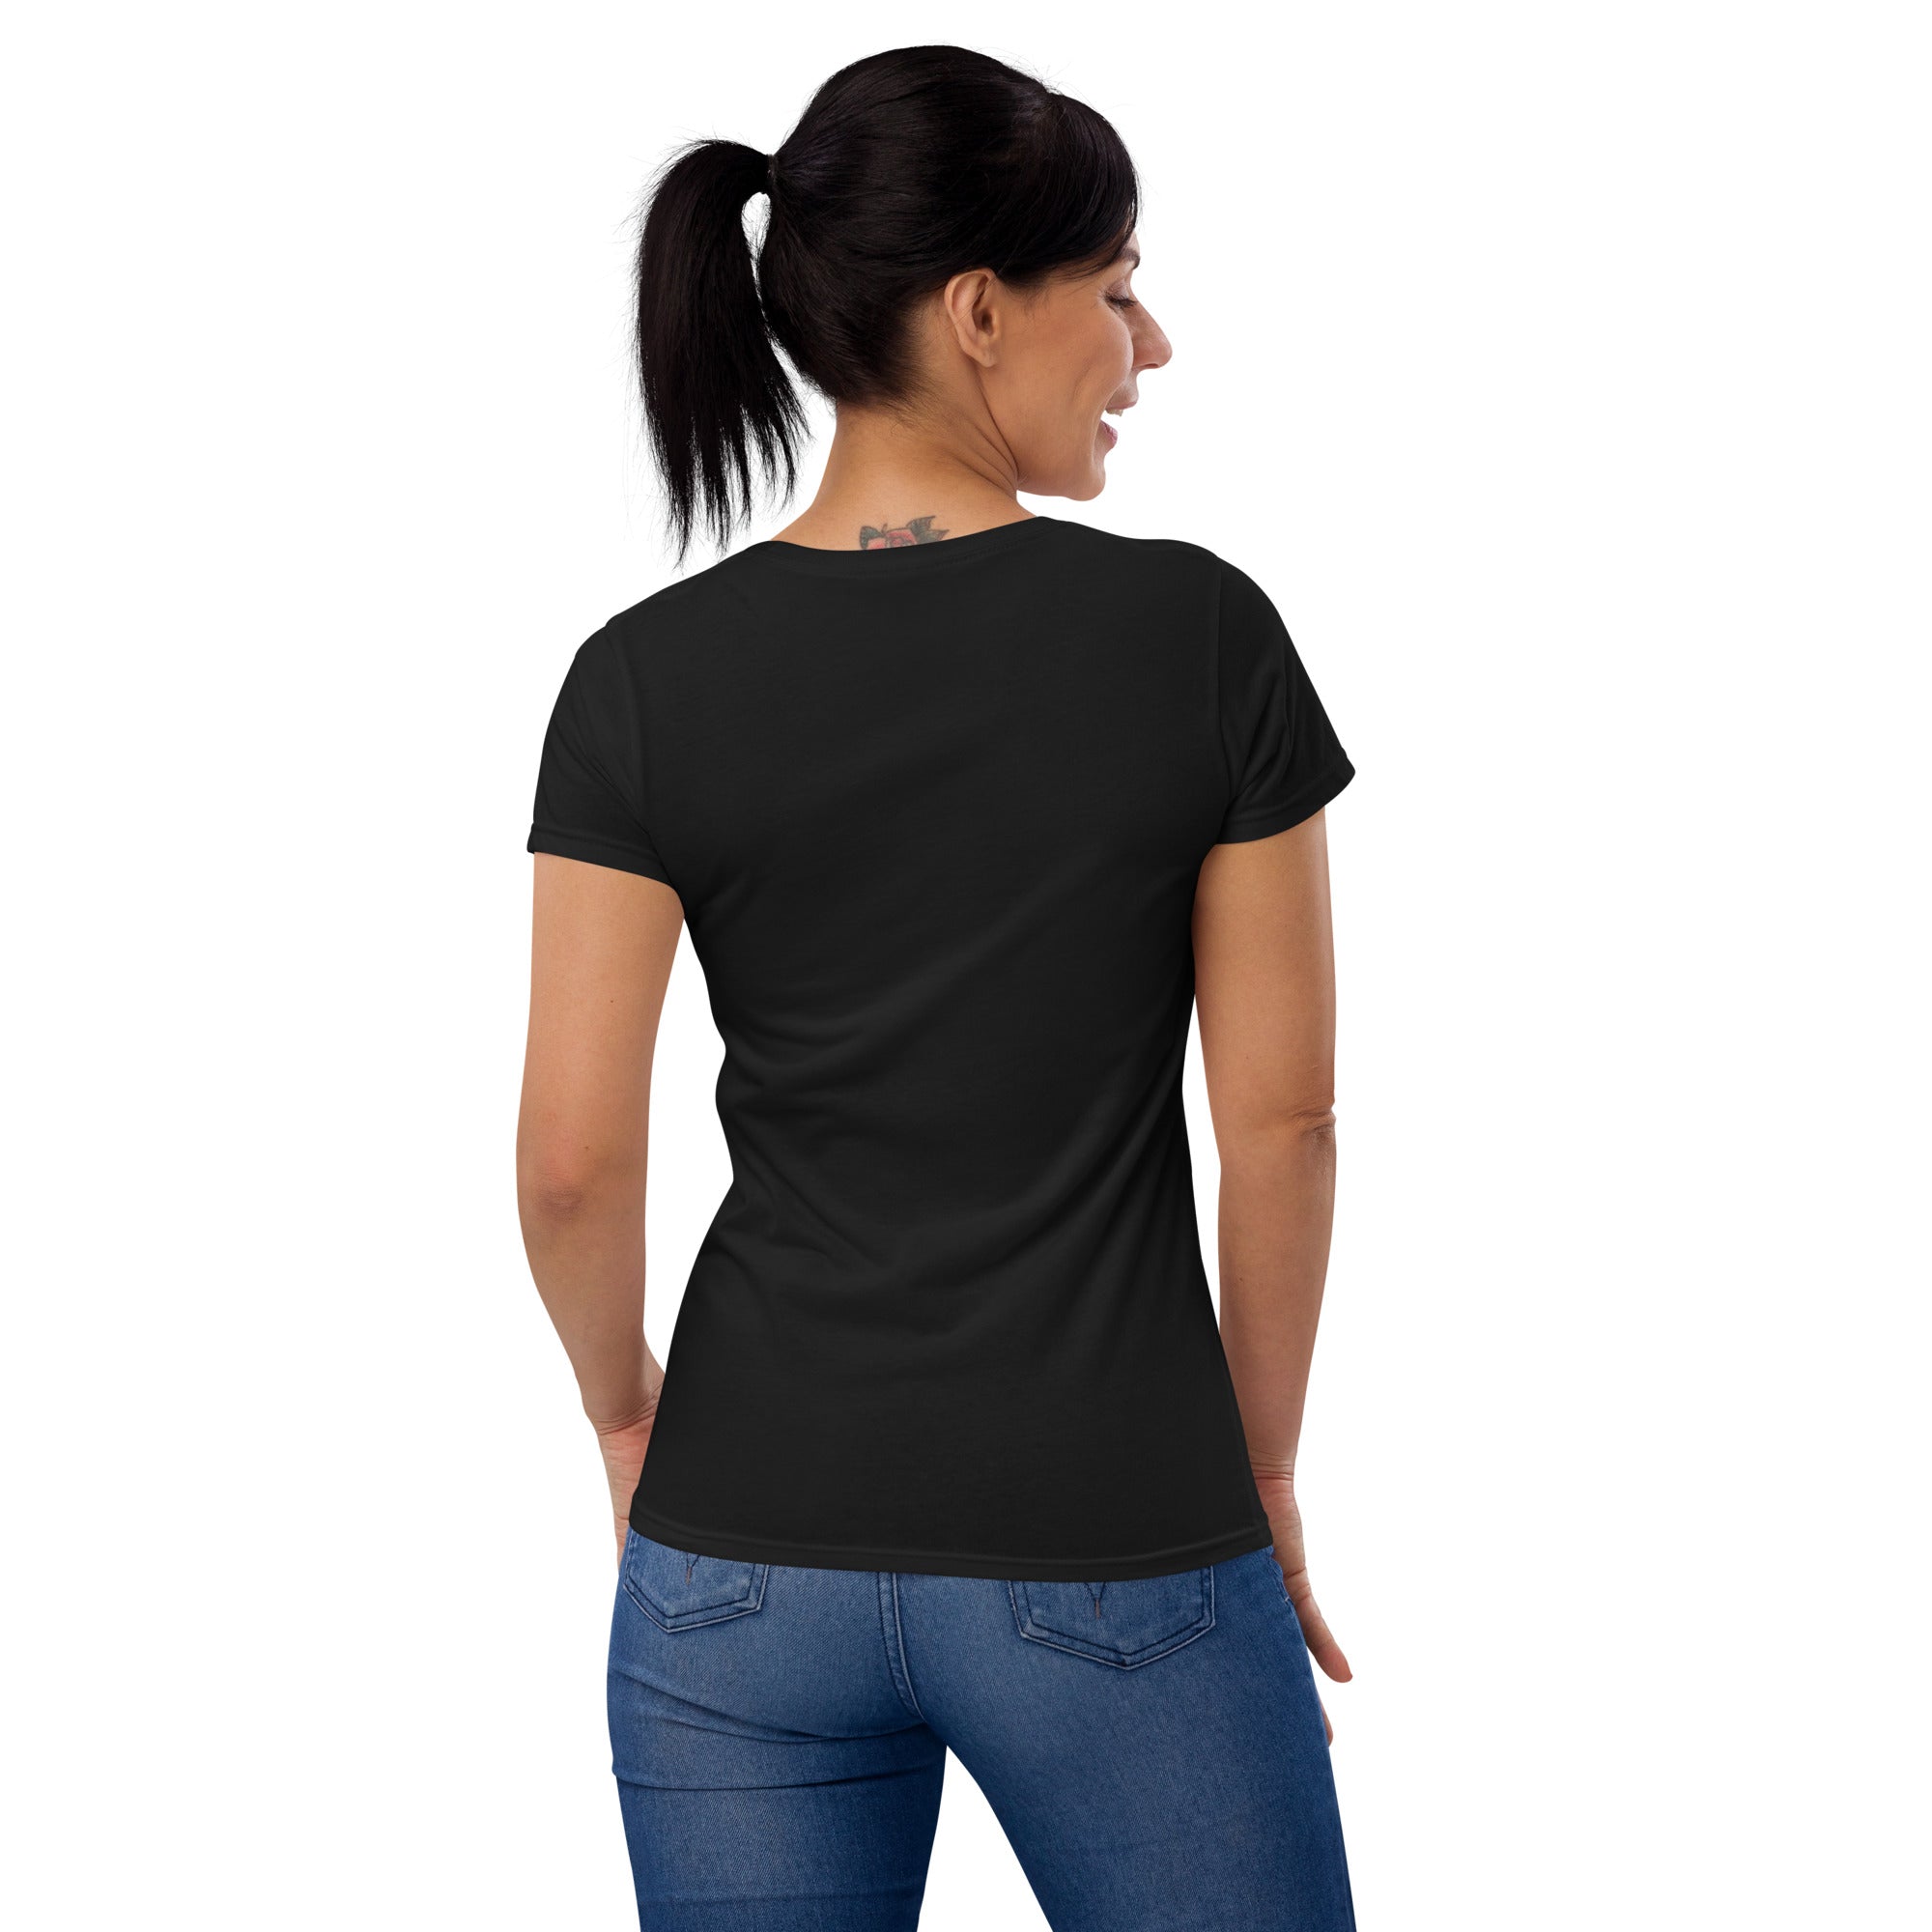 Retro 8 Bit Video Game Pixelated Heart Women's Short Sleeve Babydoll T-shirt